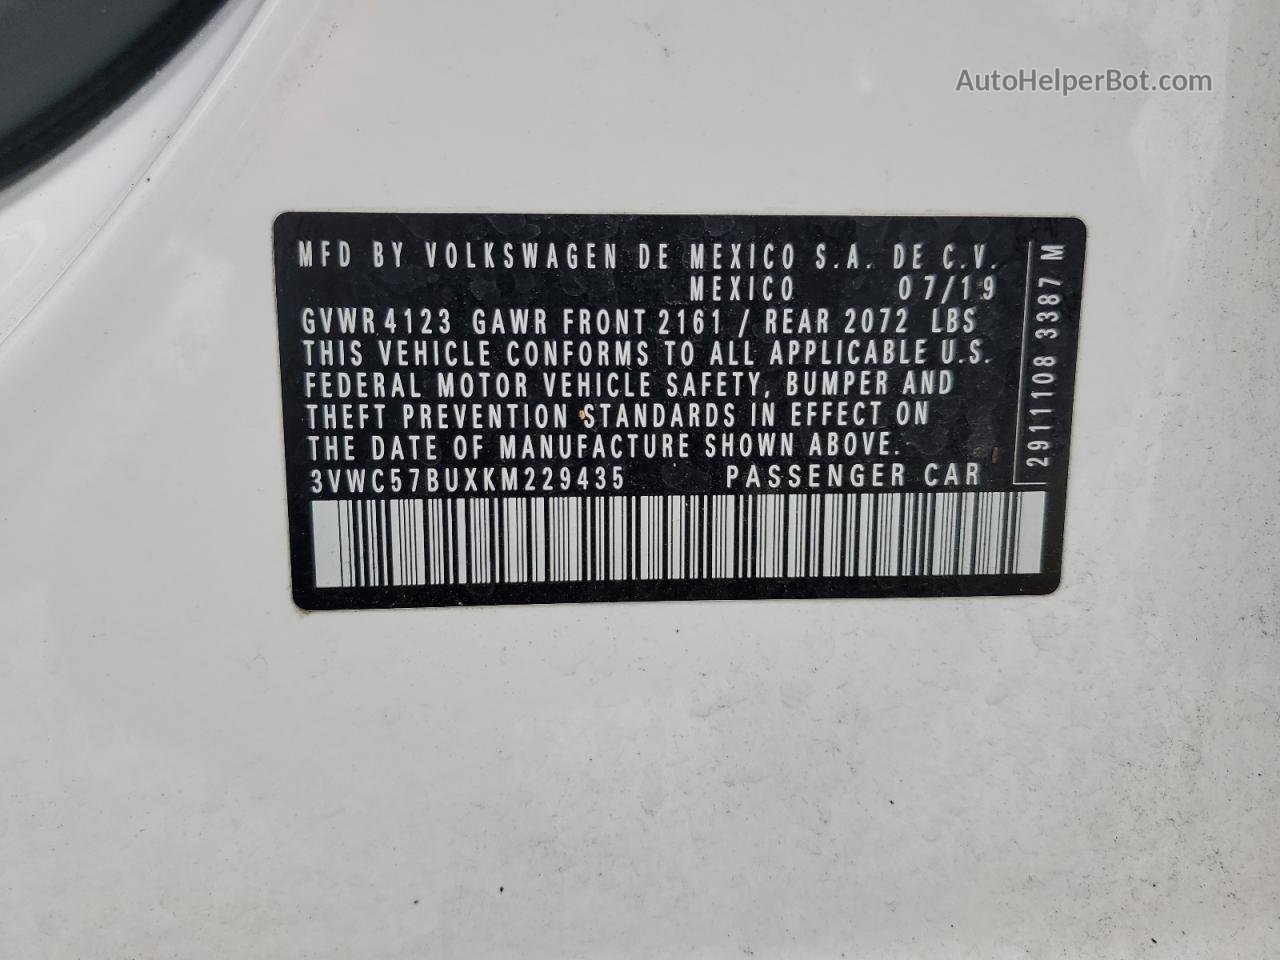 2019 Volkswagen Jetta S White vin: 3VWC57BUXKM229435